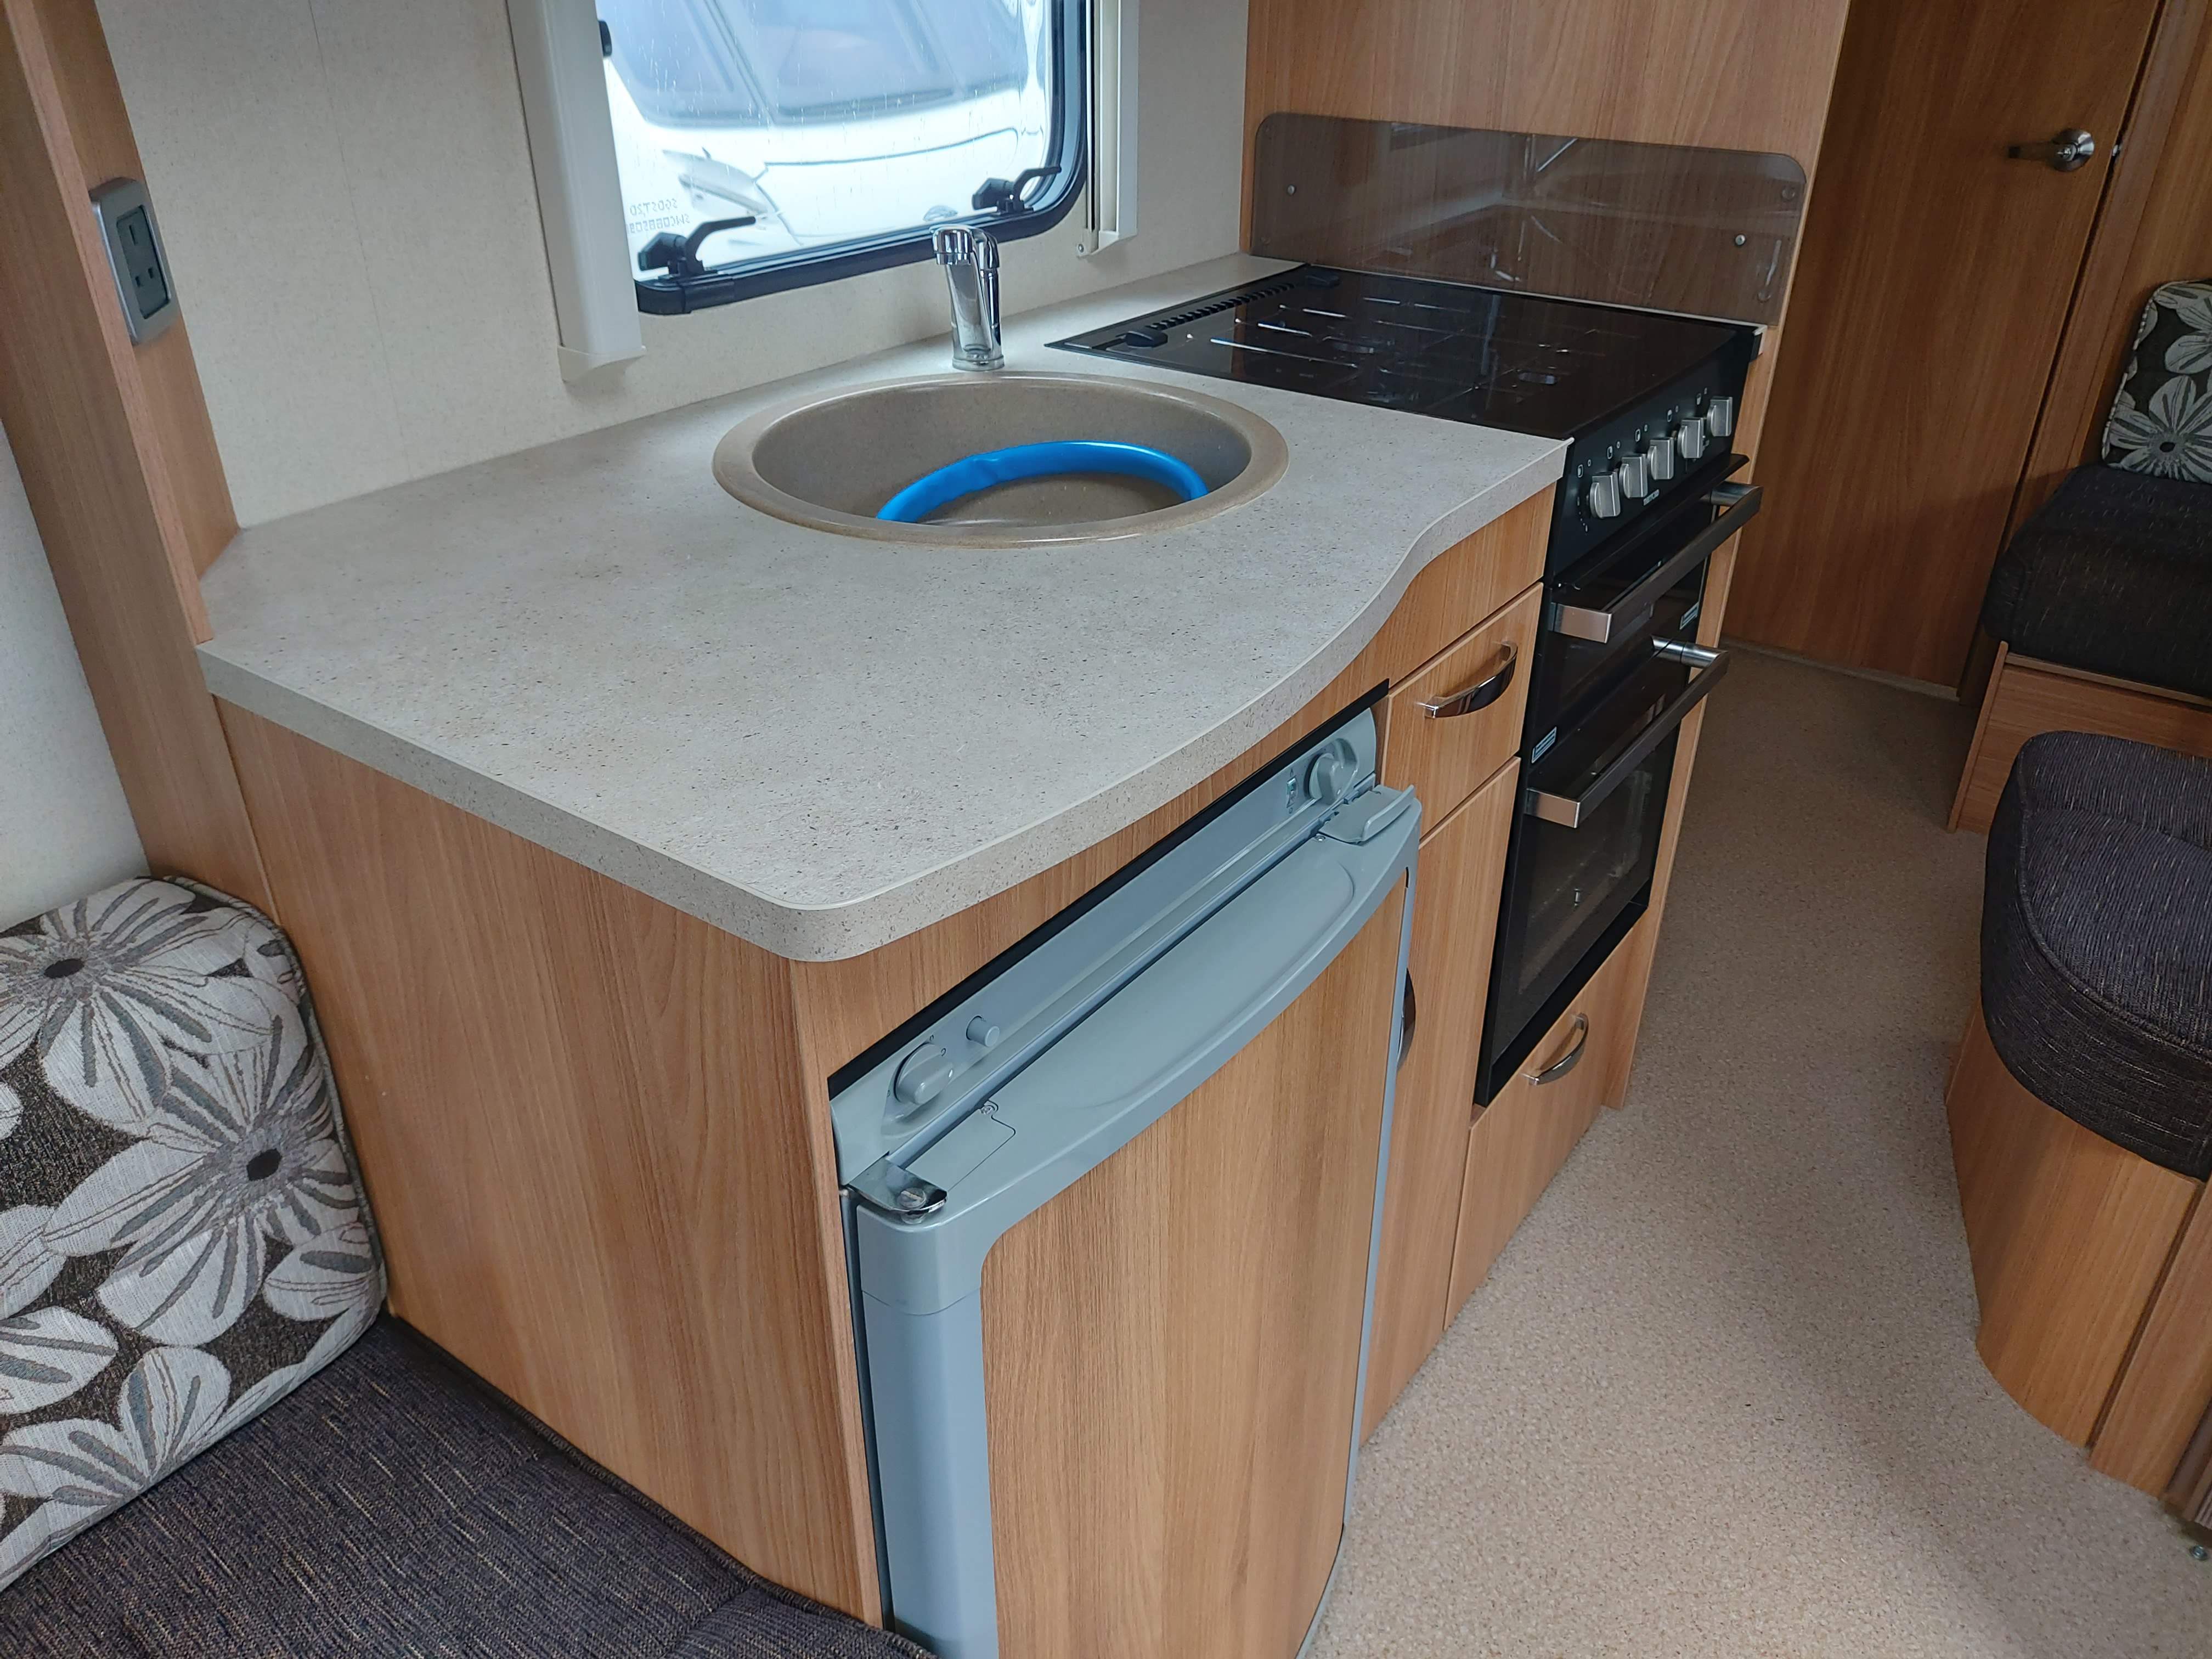 2012 Sprite Major 4, 4 Berth End Washroom Lightweight Caravan, Motor Mover